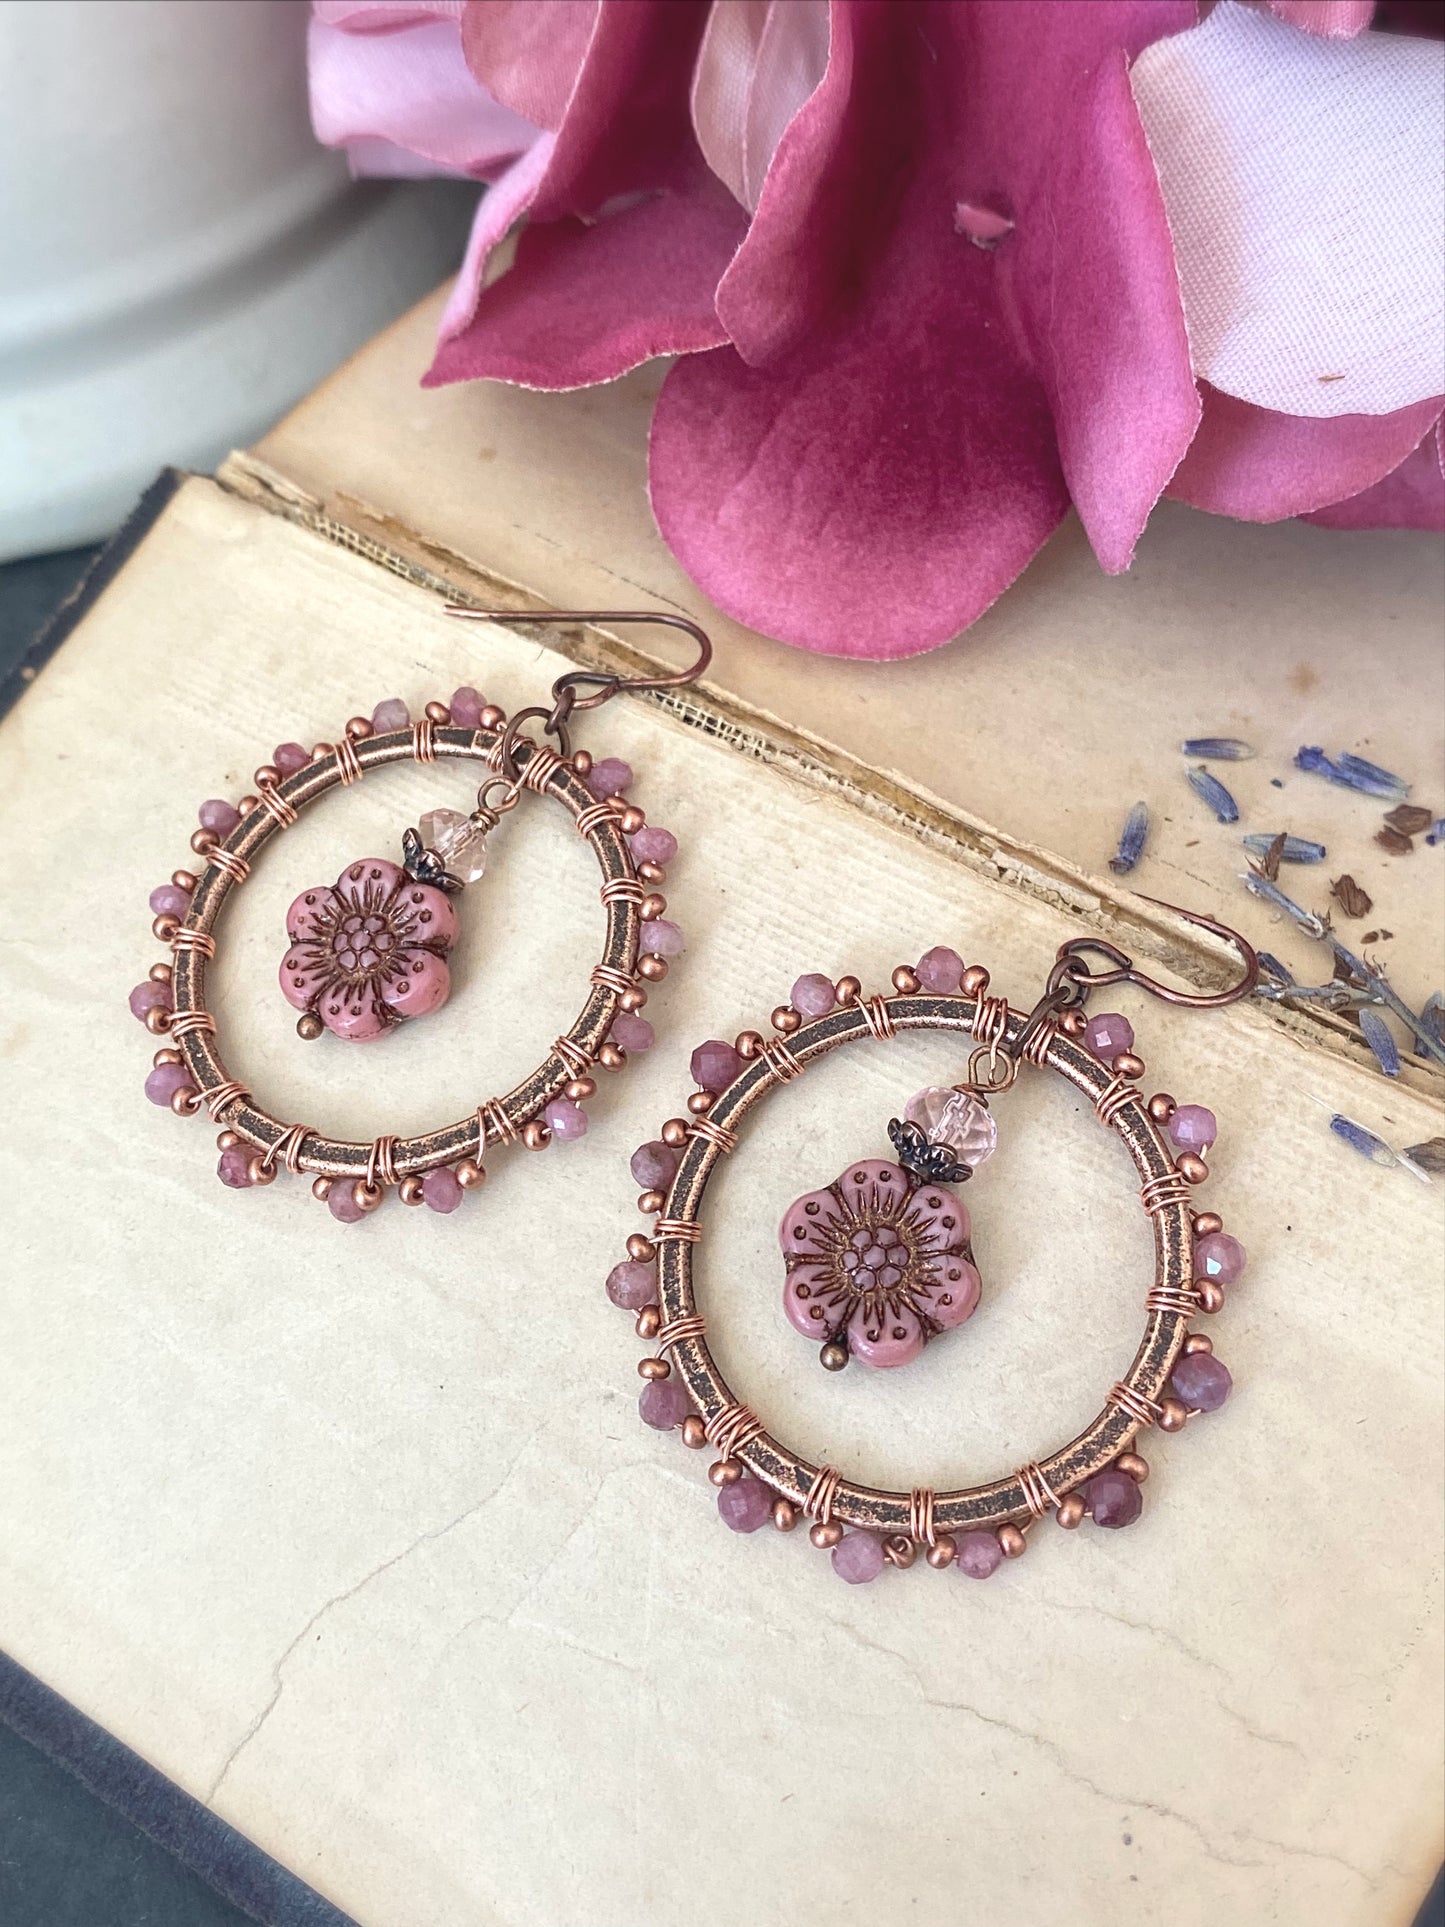 Pink tourmaline stone, pink Czech glass flowers, copper metal hoops, wire wrapped, earrings